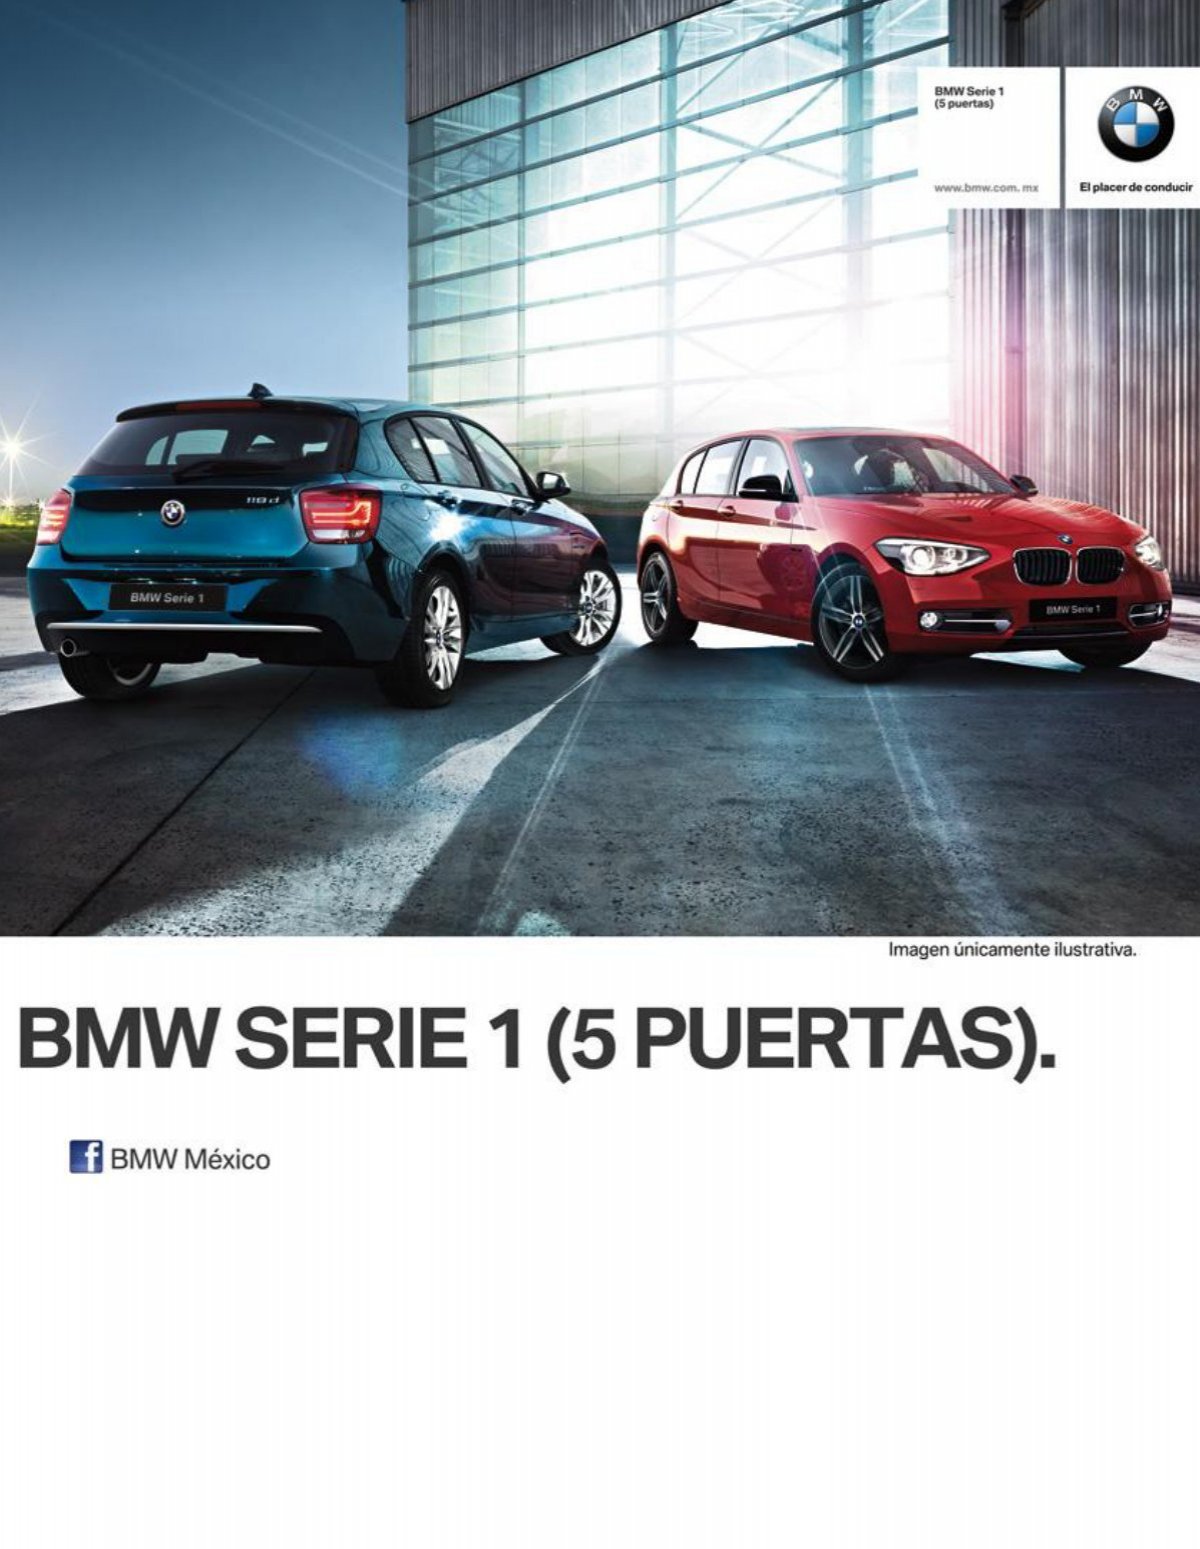 BMW F20 1 Series 5 Doors 118i Ficha Tecnica, consumo y dimensiones